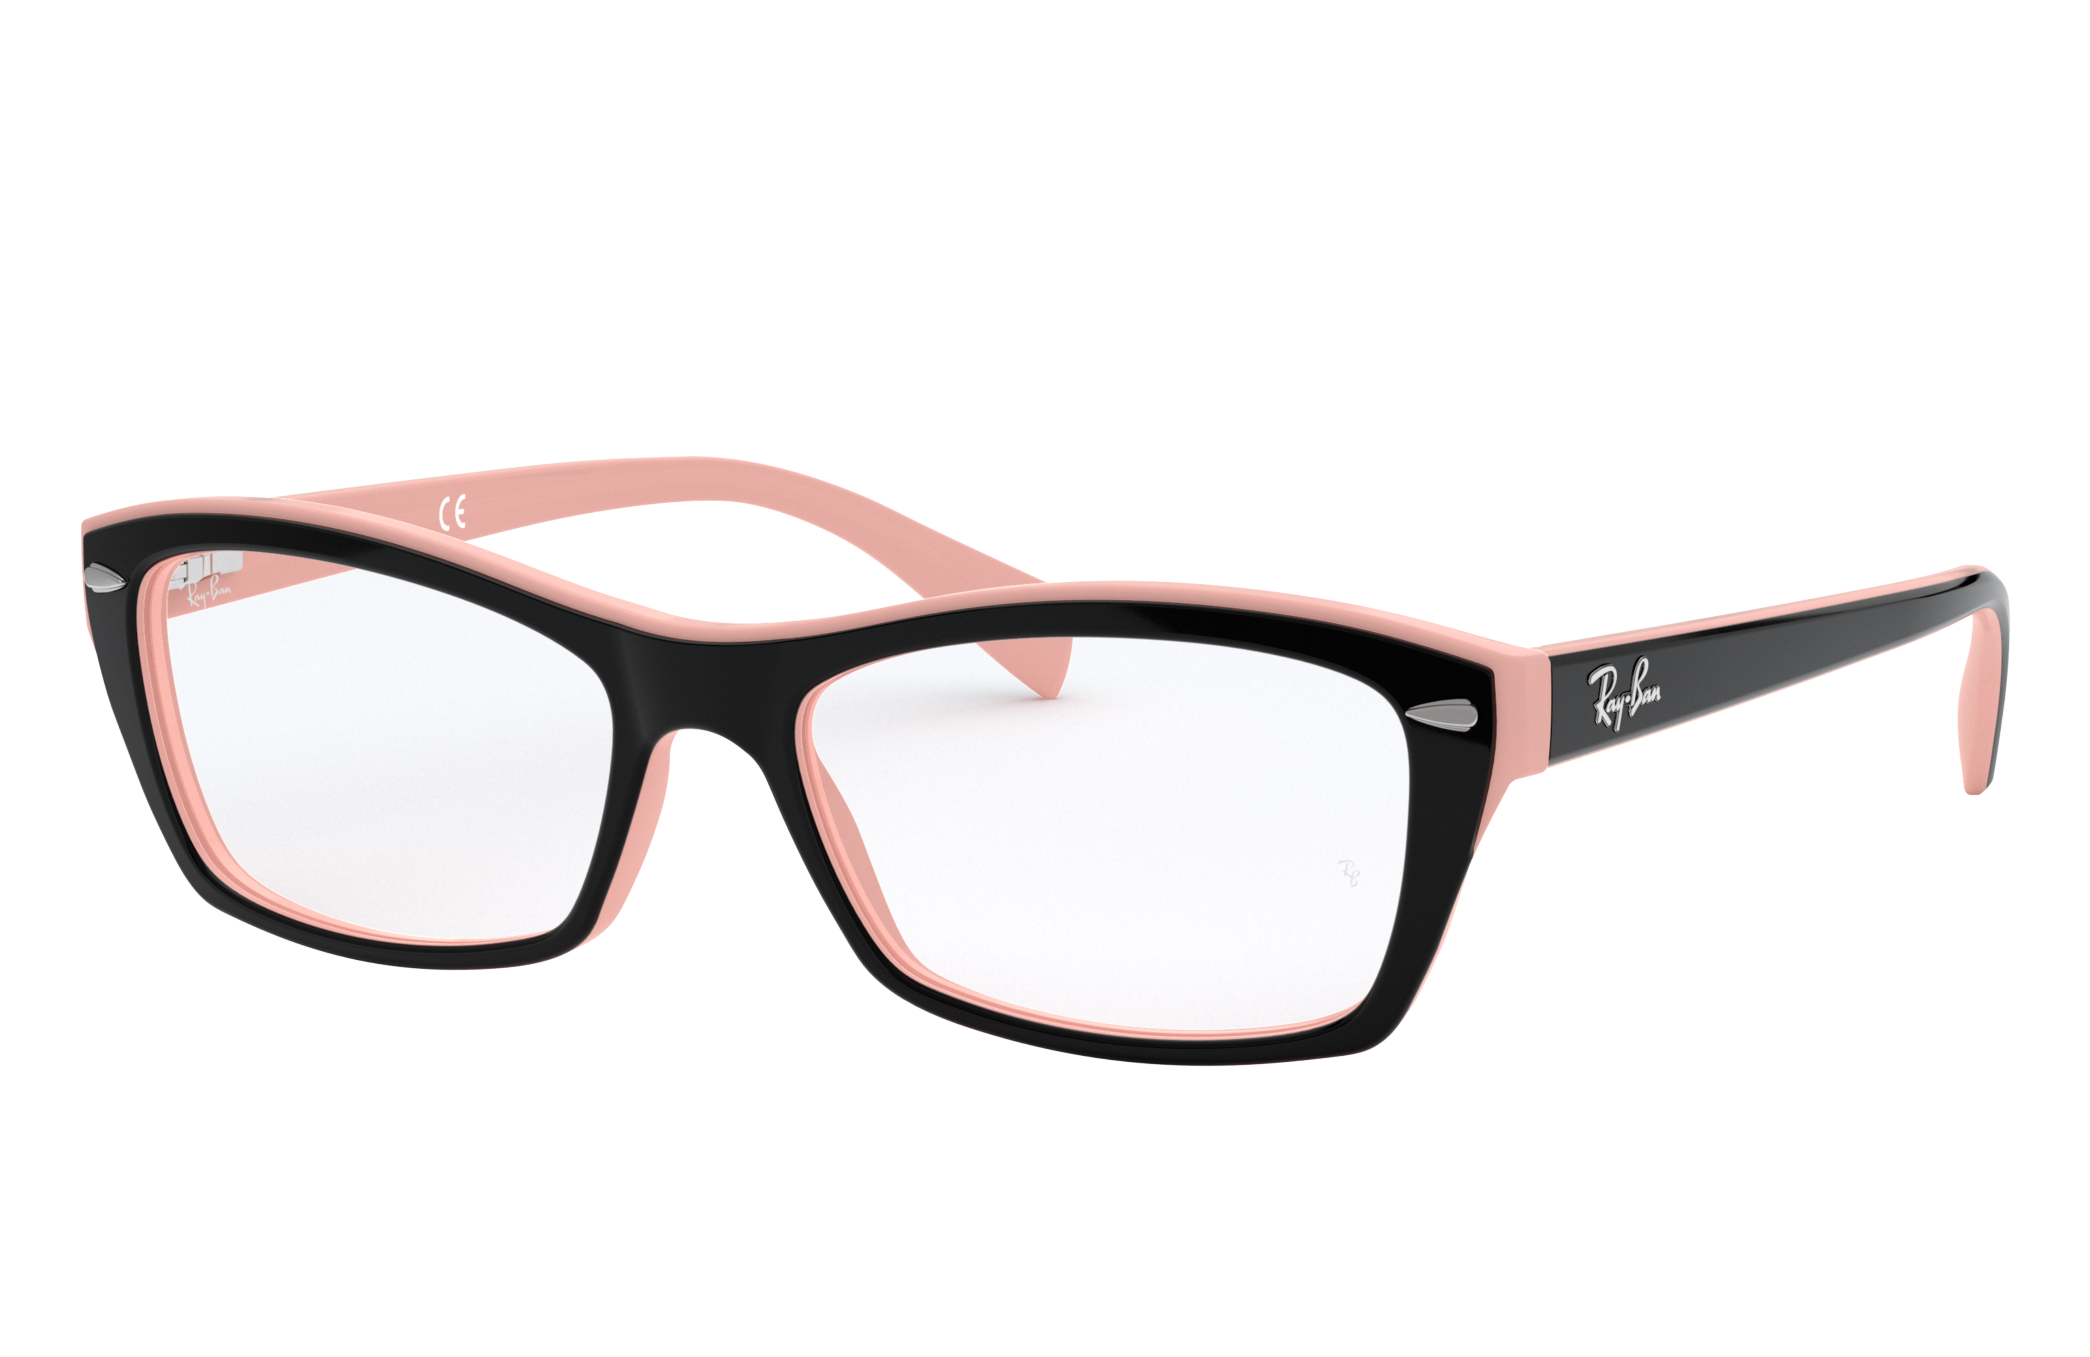 Rb5255 Optics Eyeglasses with Black On Pink Frame | Ray-Ban®